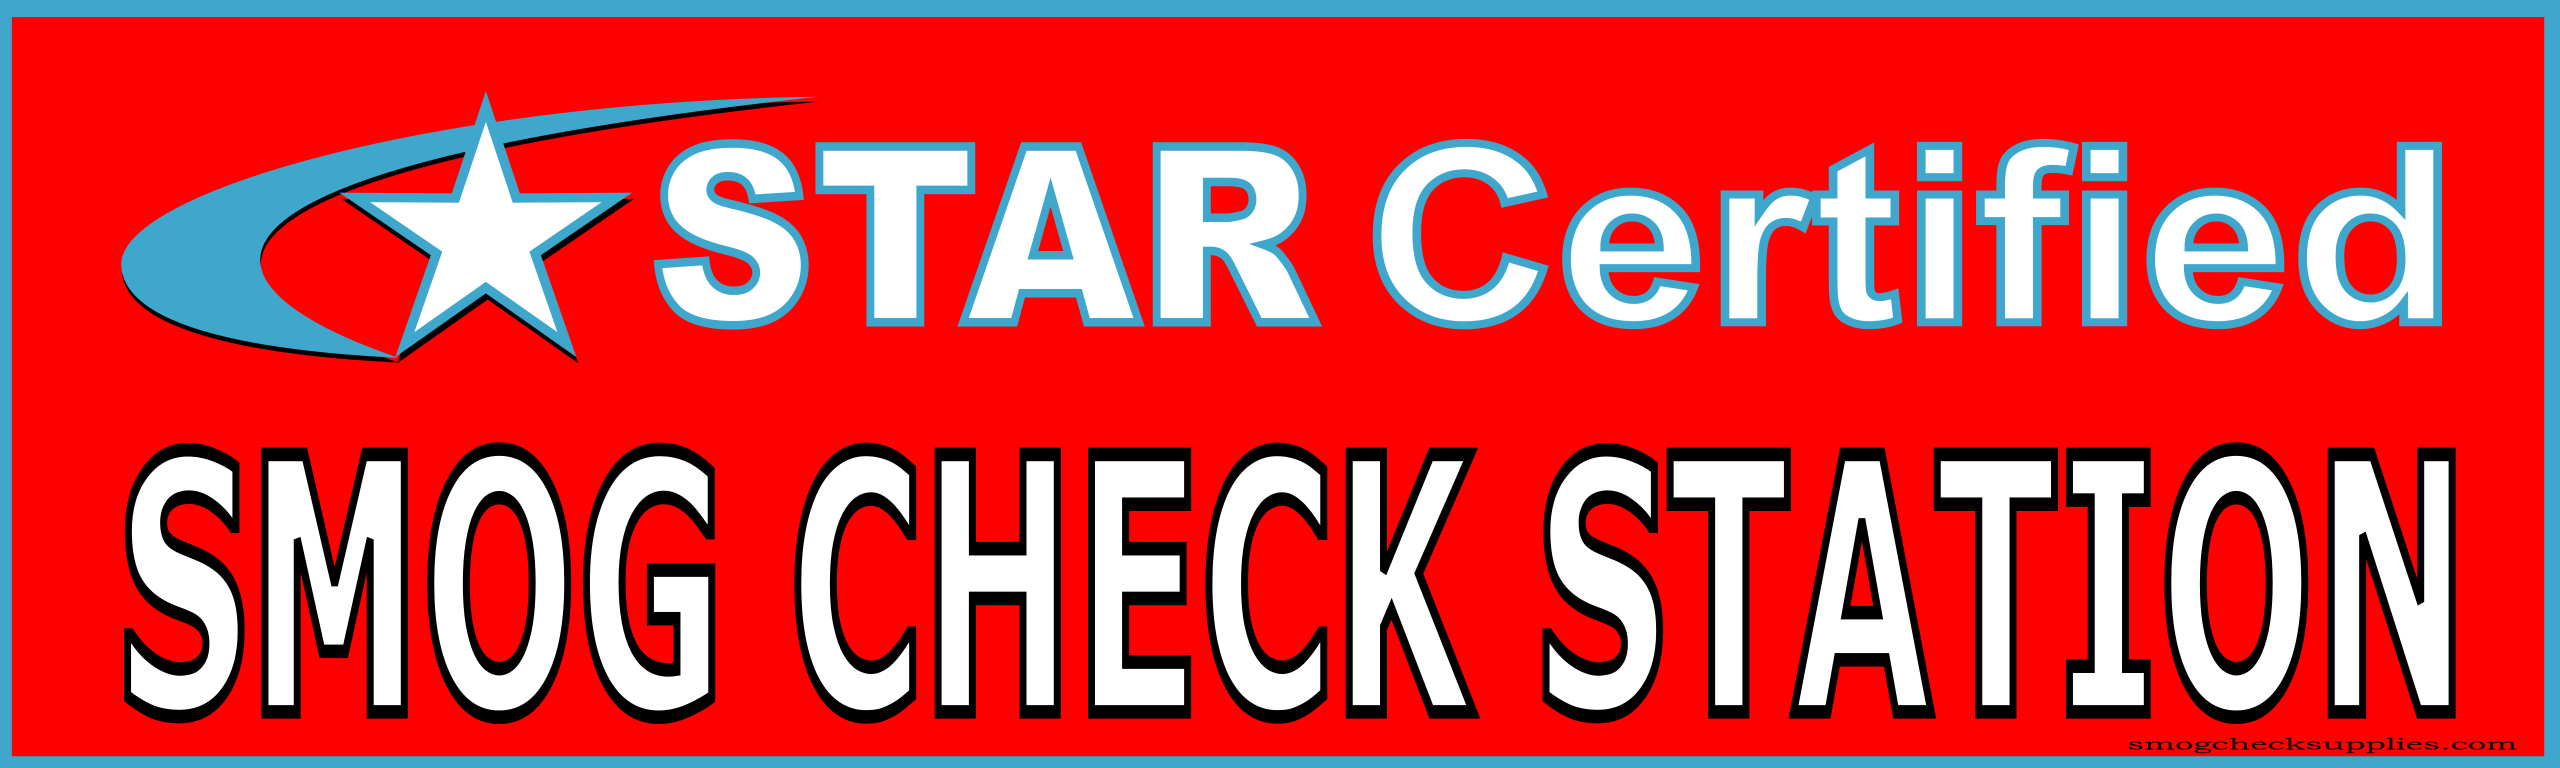 STAR CERTIFIED SMOG CHECK STATION BLUE BORDER